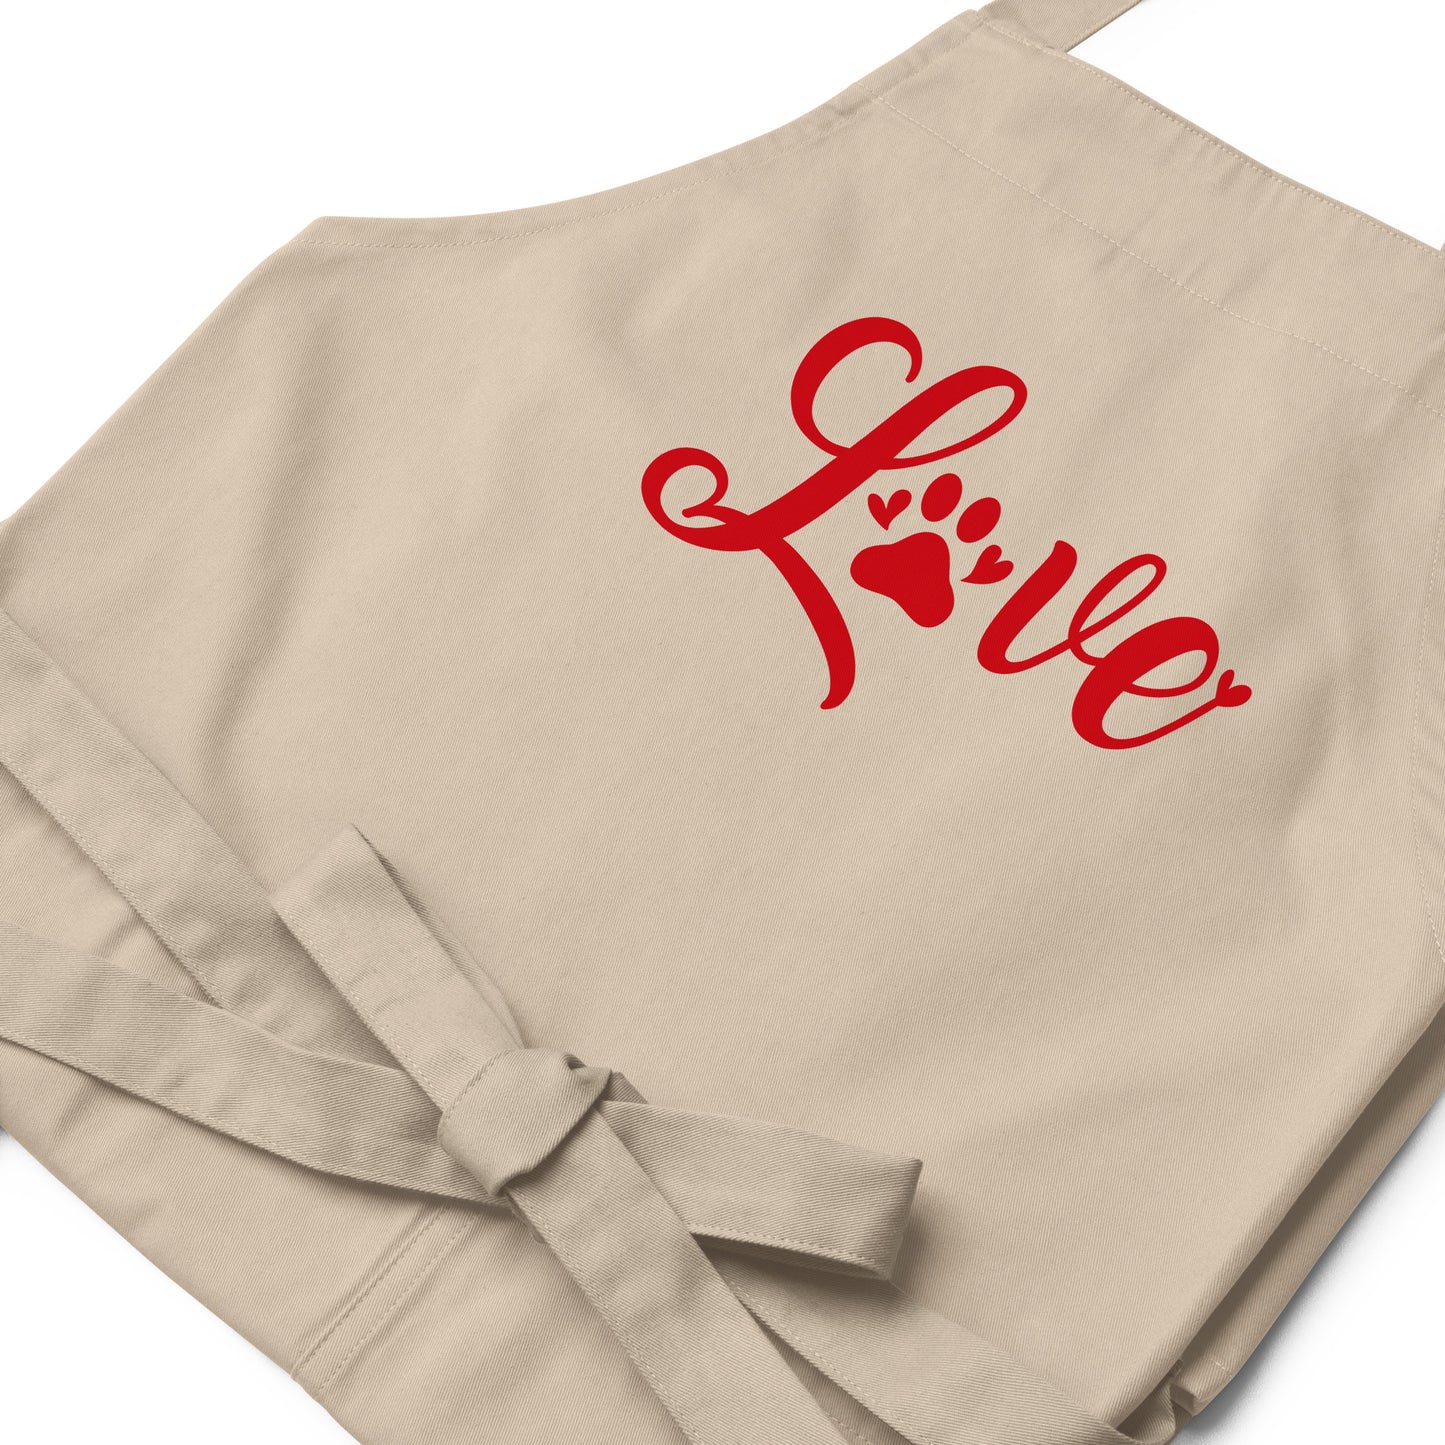 Love Organic cotton apron